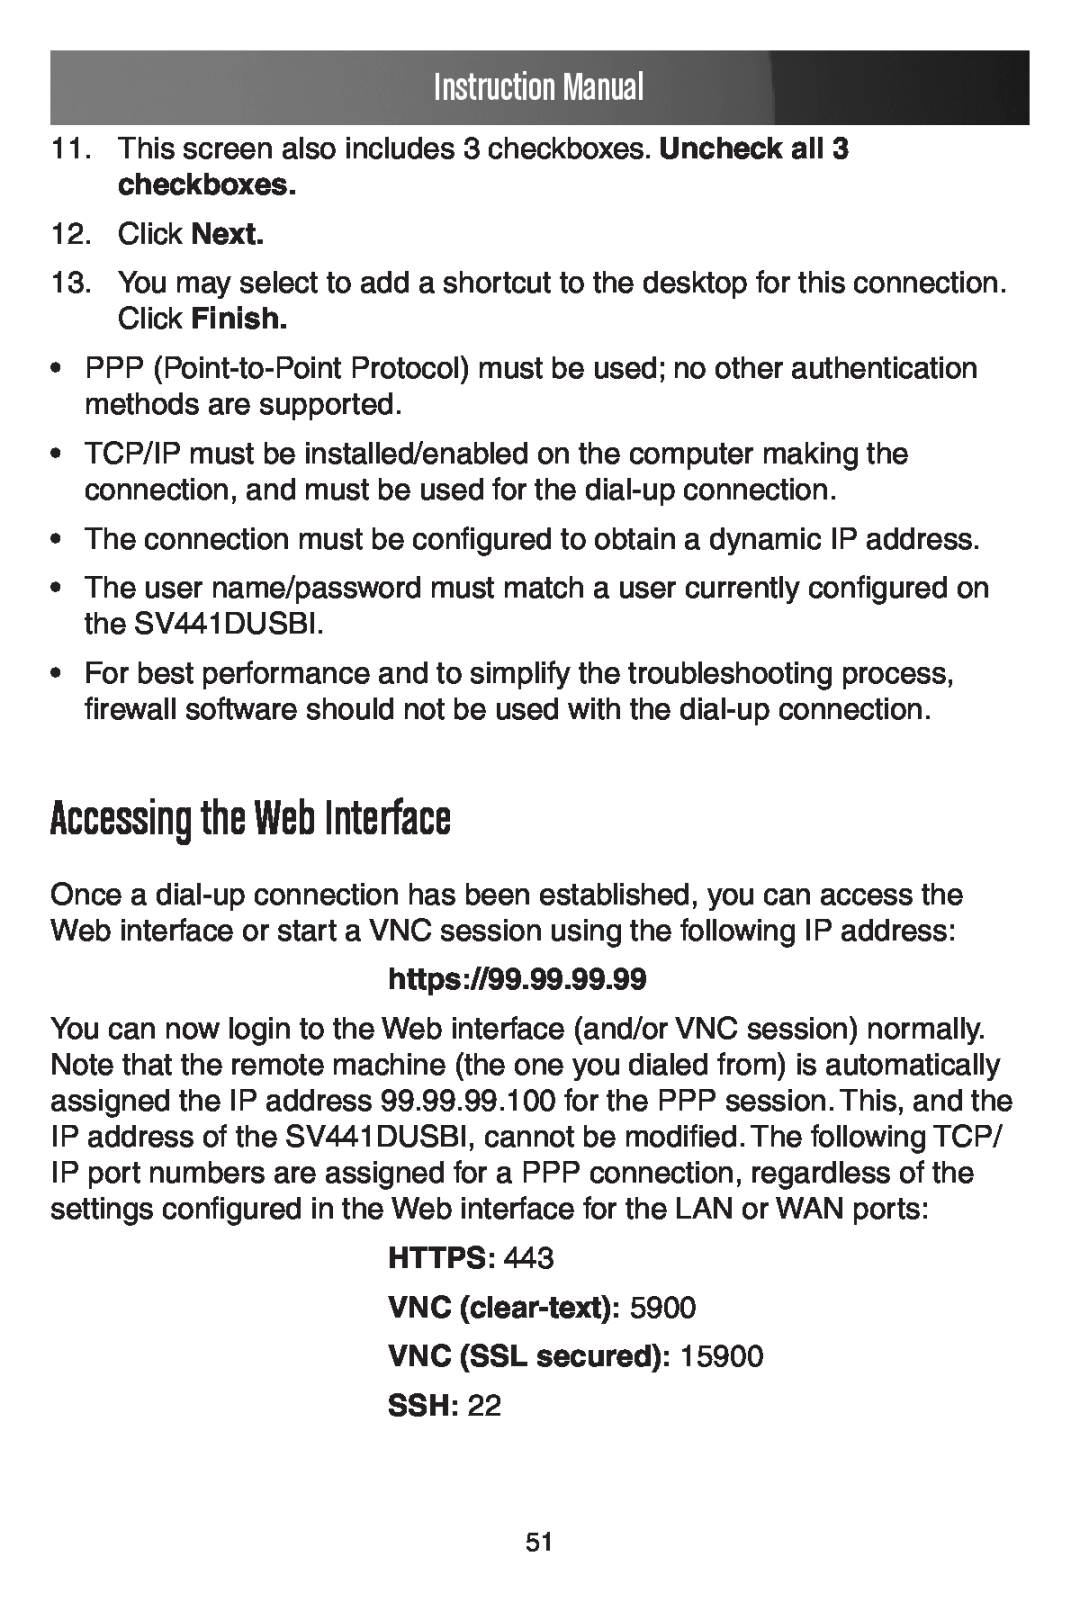 StarTech.com SV441DUSBI Accessing the Web Interface, https//99.99.99.99, HTTPS VNC clear-text VNC SSL secured SSH 